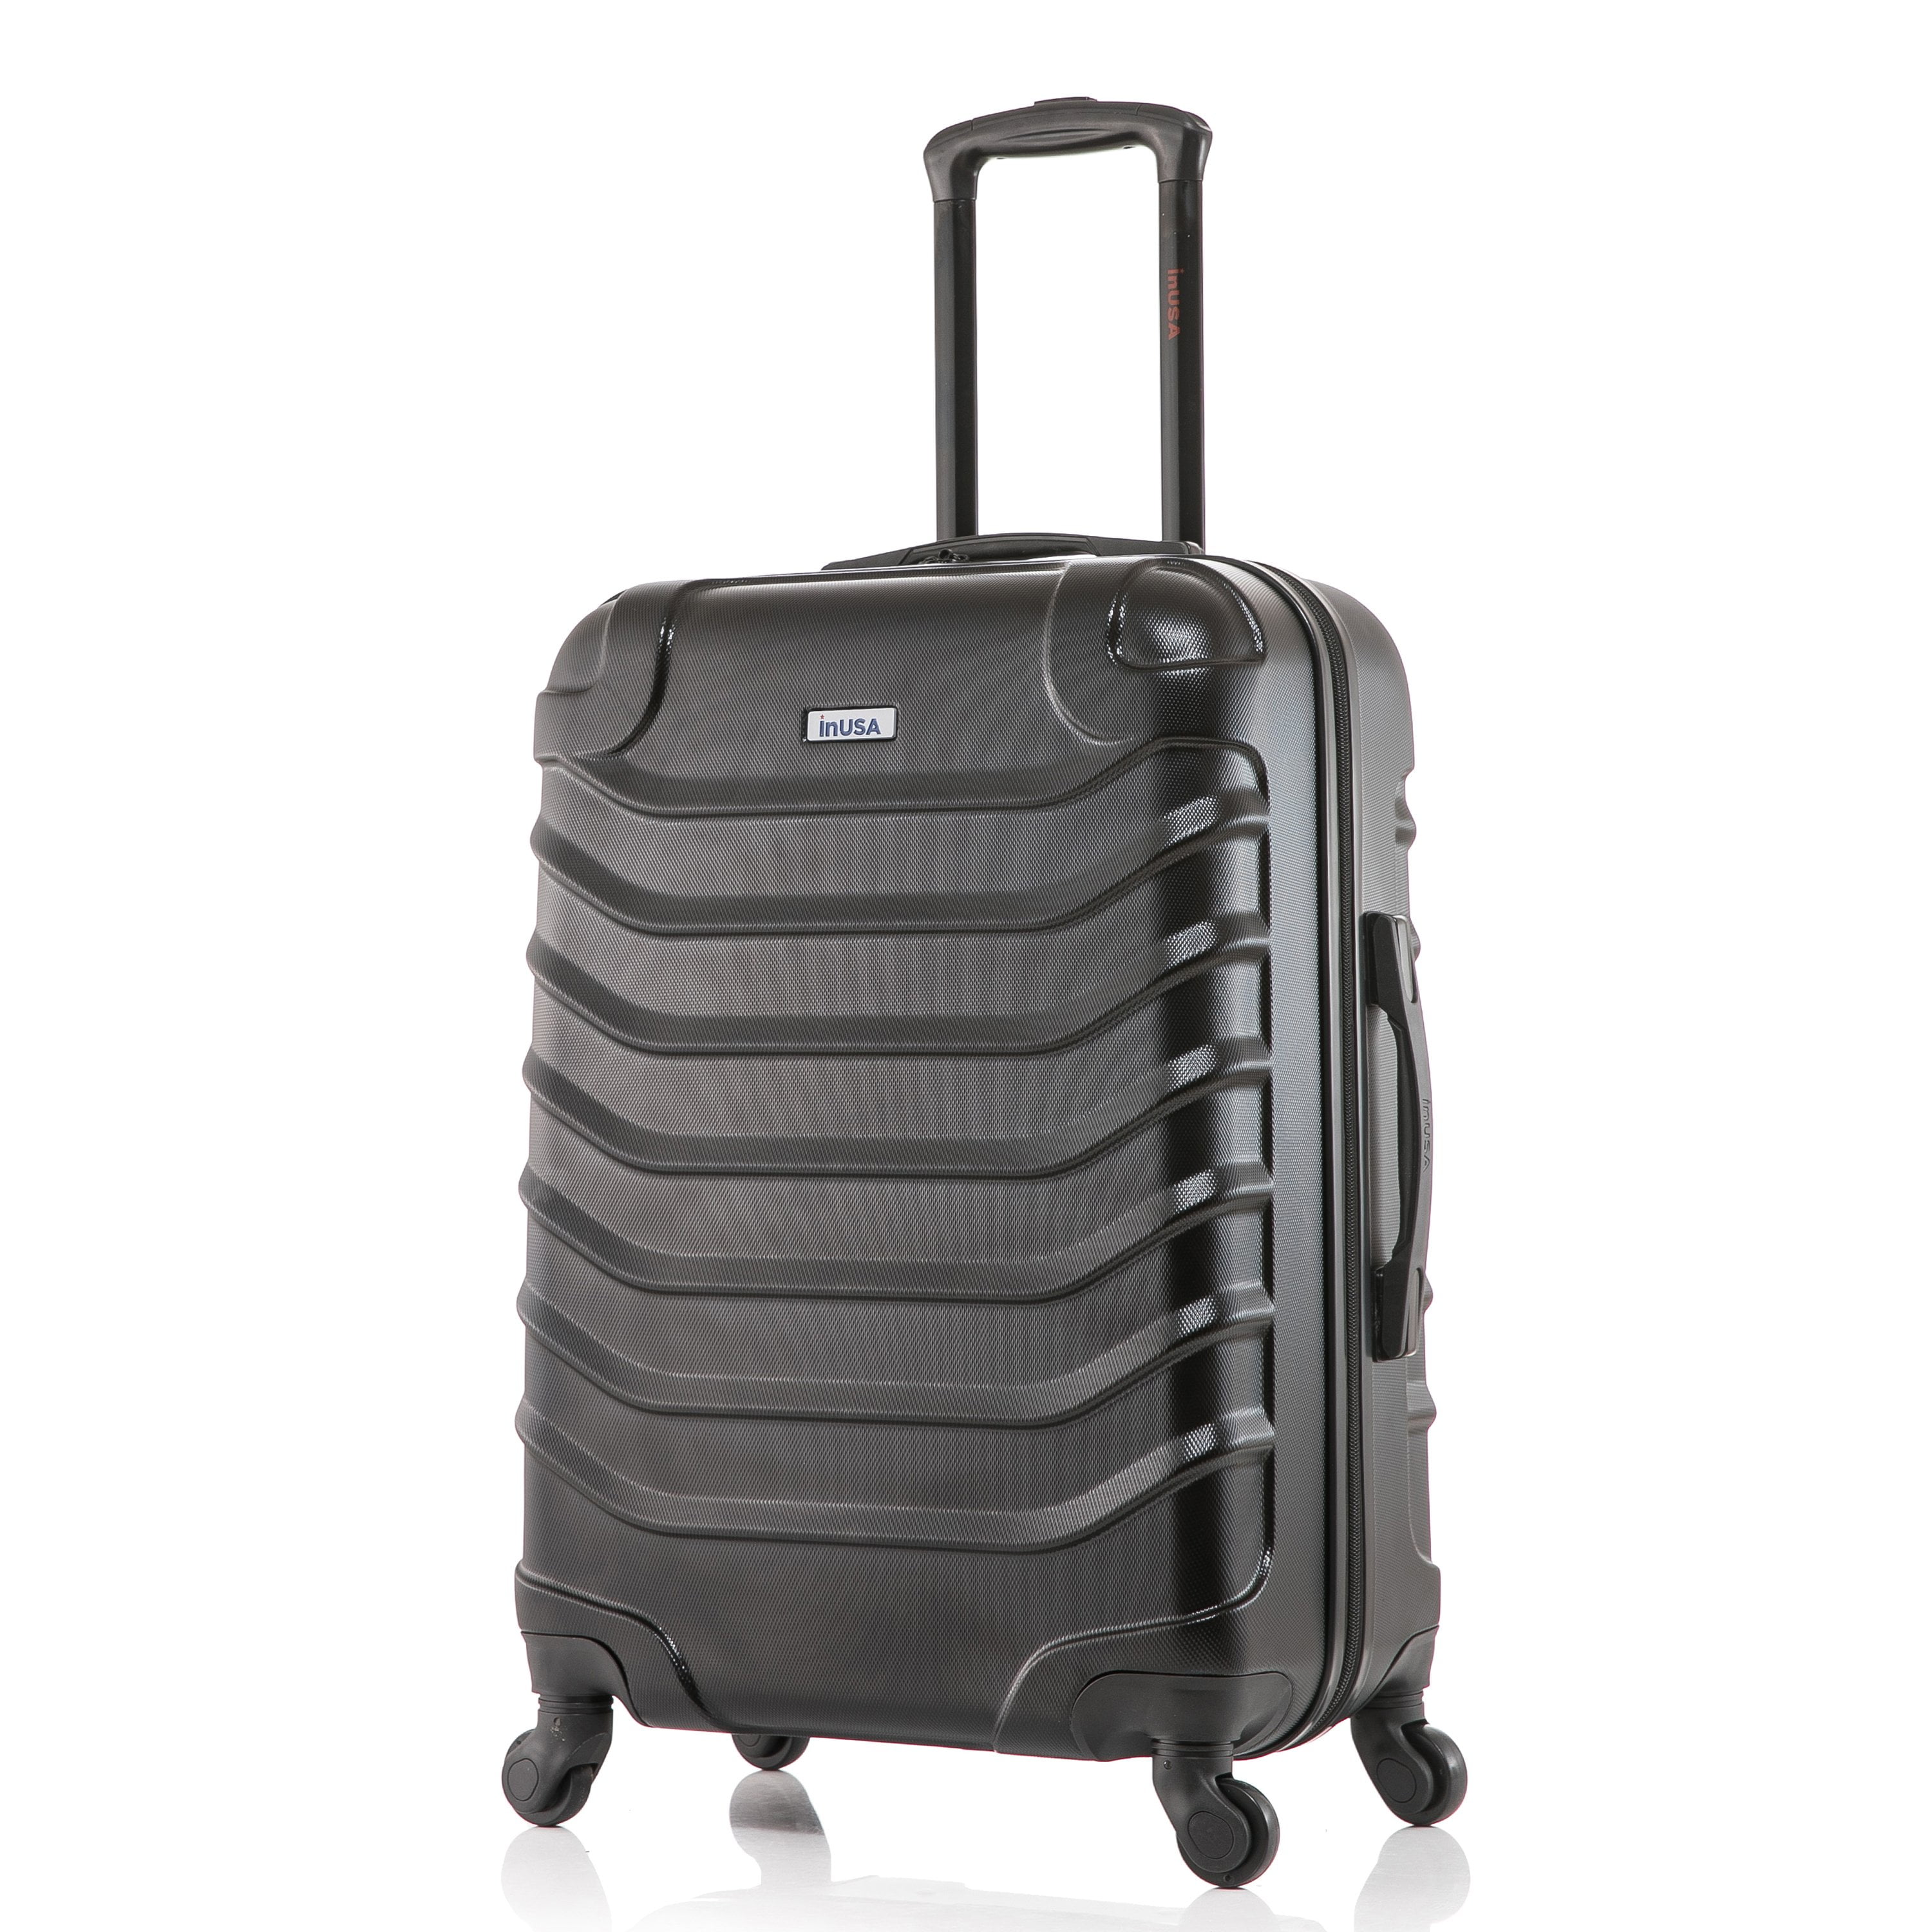 Samsonite Prisma Silver 360° Spinner 4 Wheel Hardside Suitcase Luggage Suit Case 